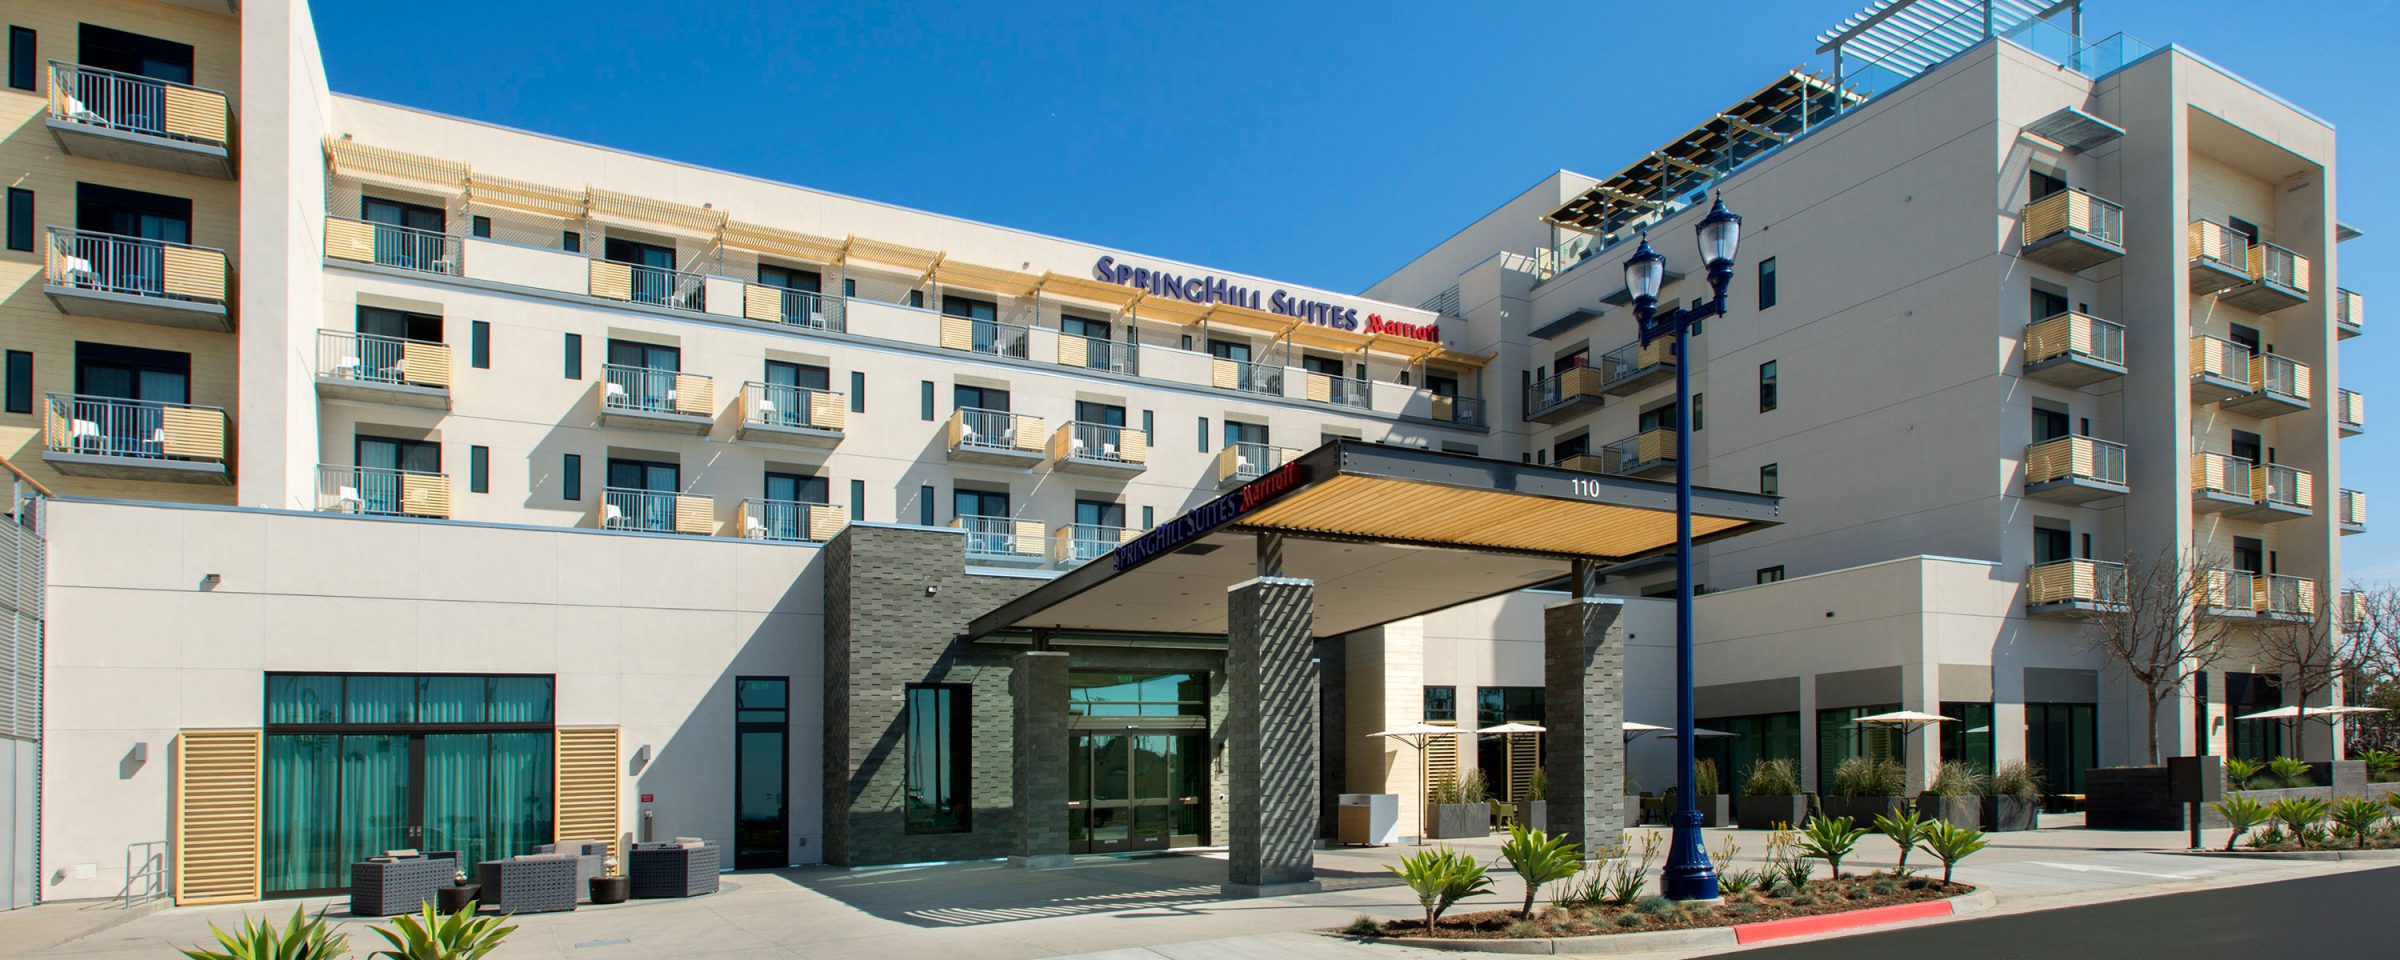 SpringHill Suites Marriott – Oceanside, CA